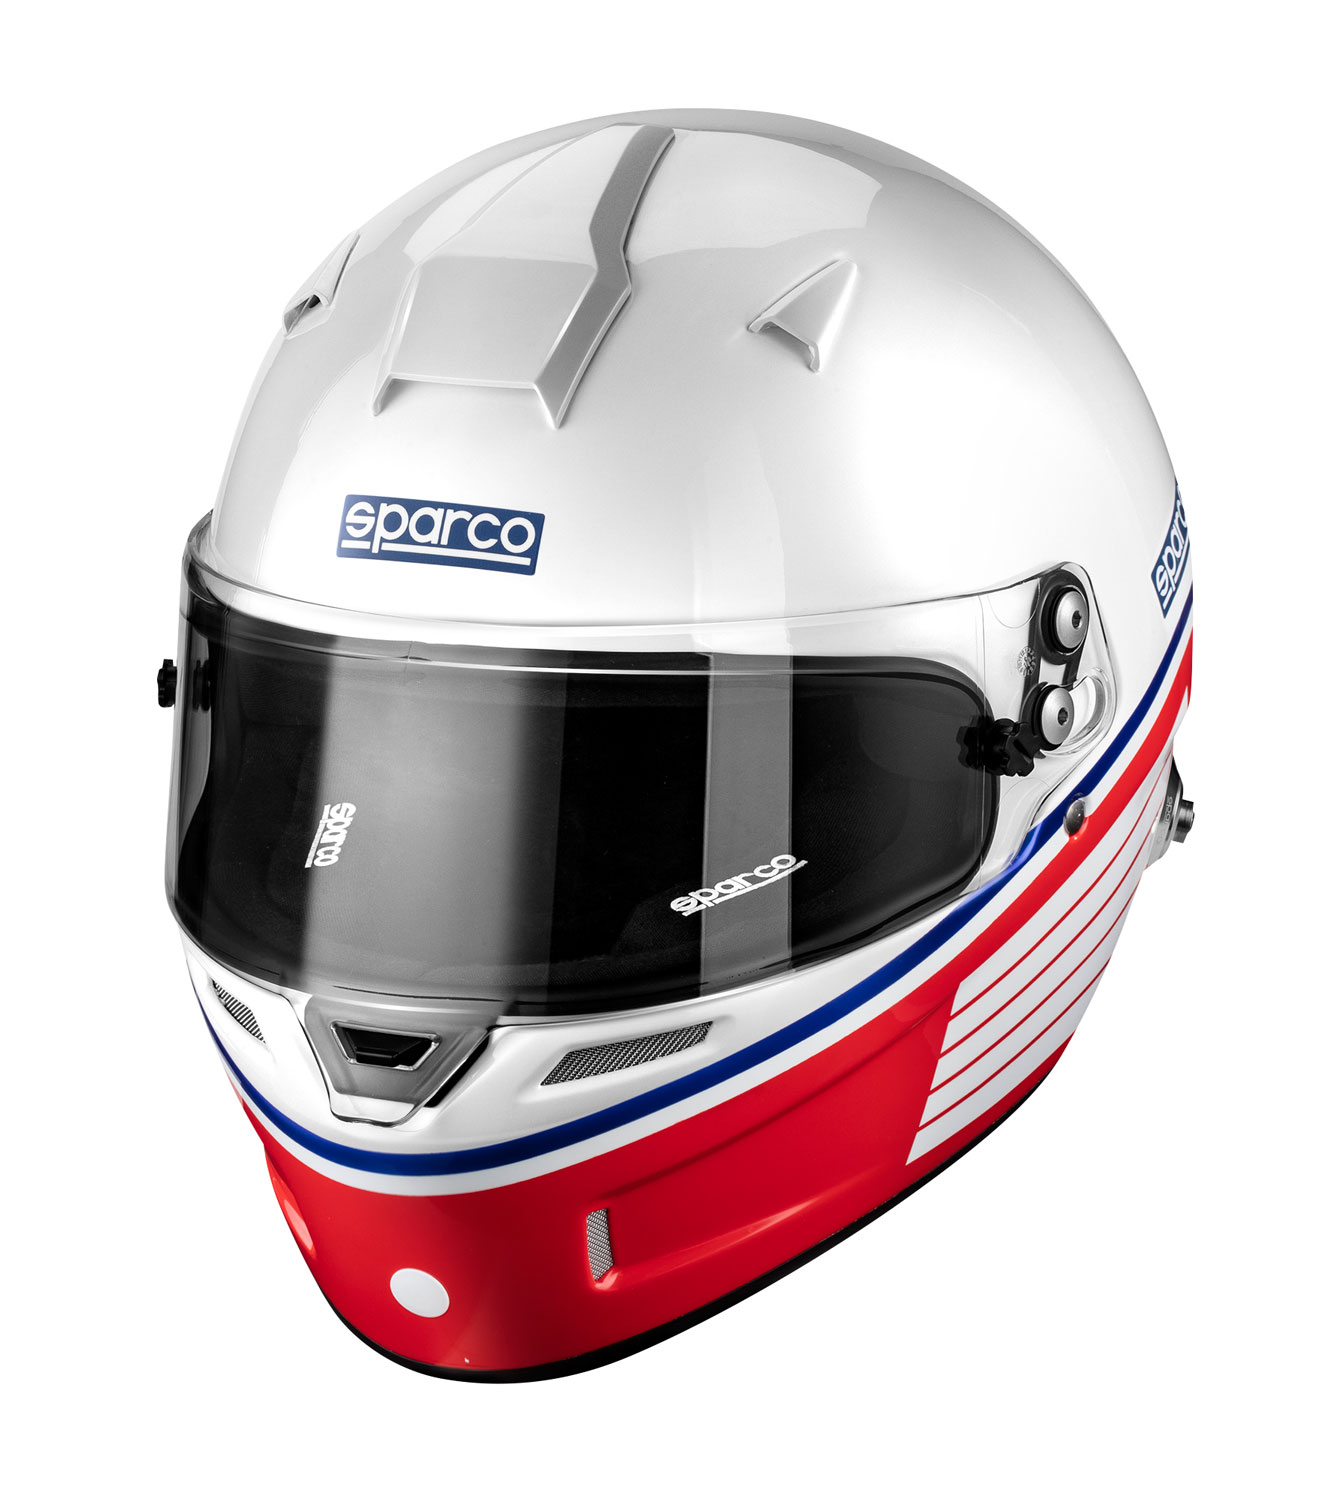 Sparco Helm Martini Racing (Logo-Design)